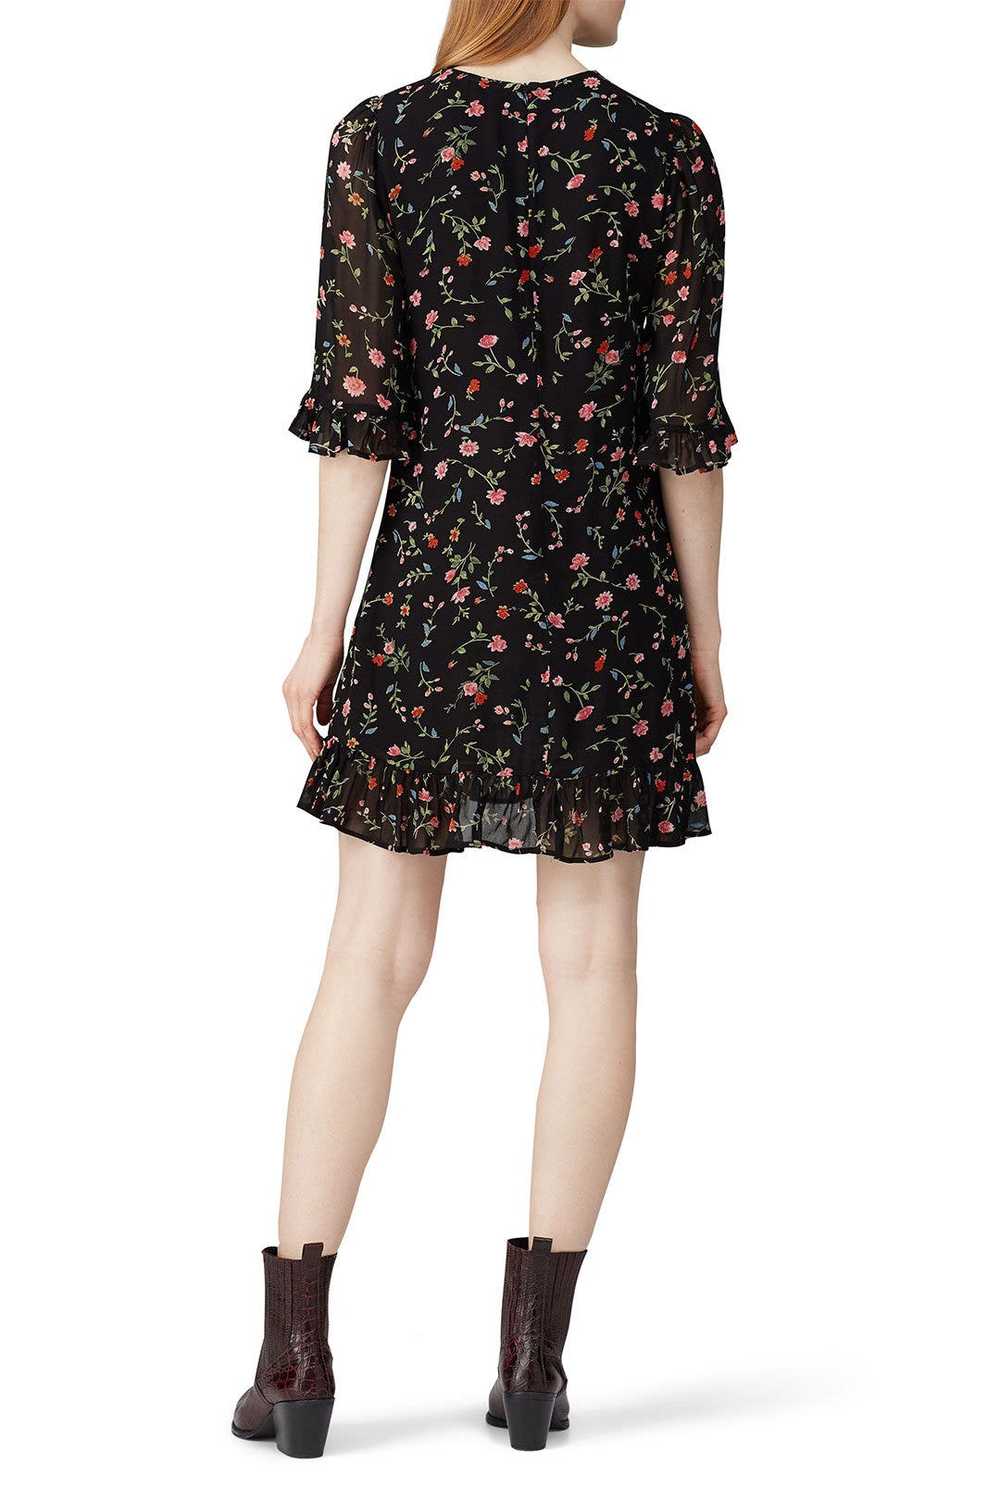 GANNI Black Floral Mini Dress - image 3